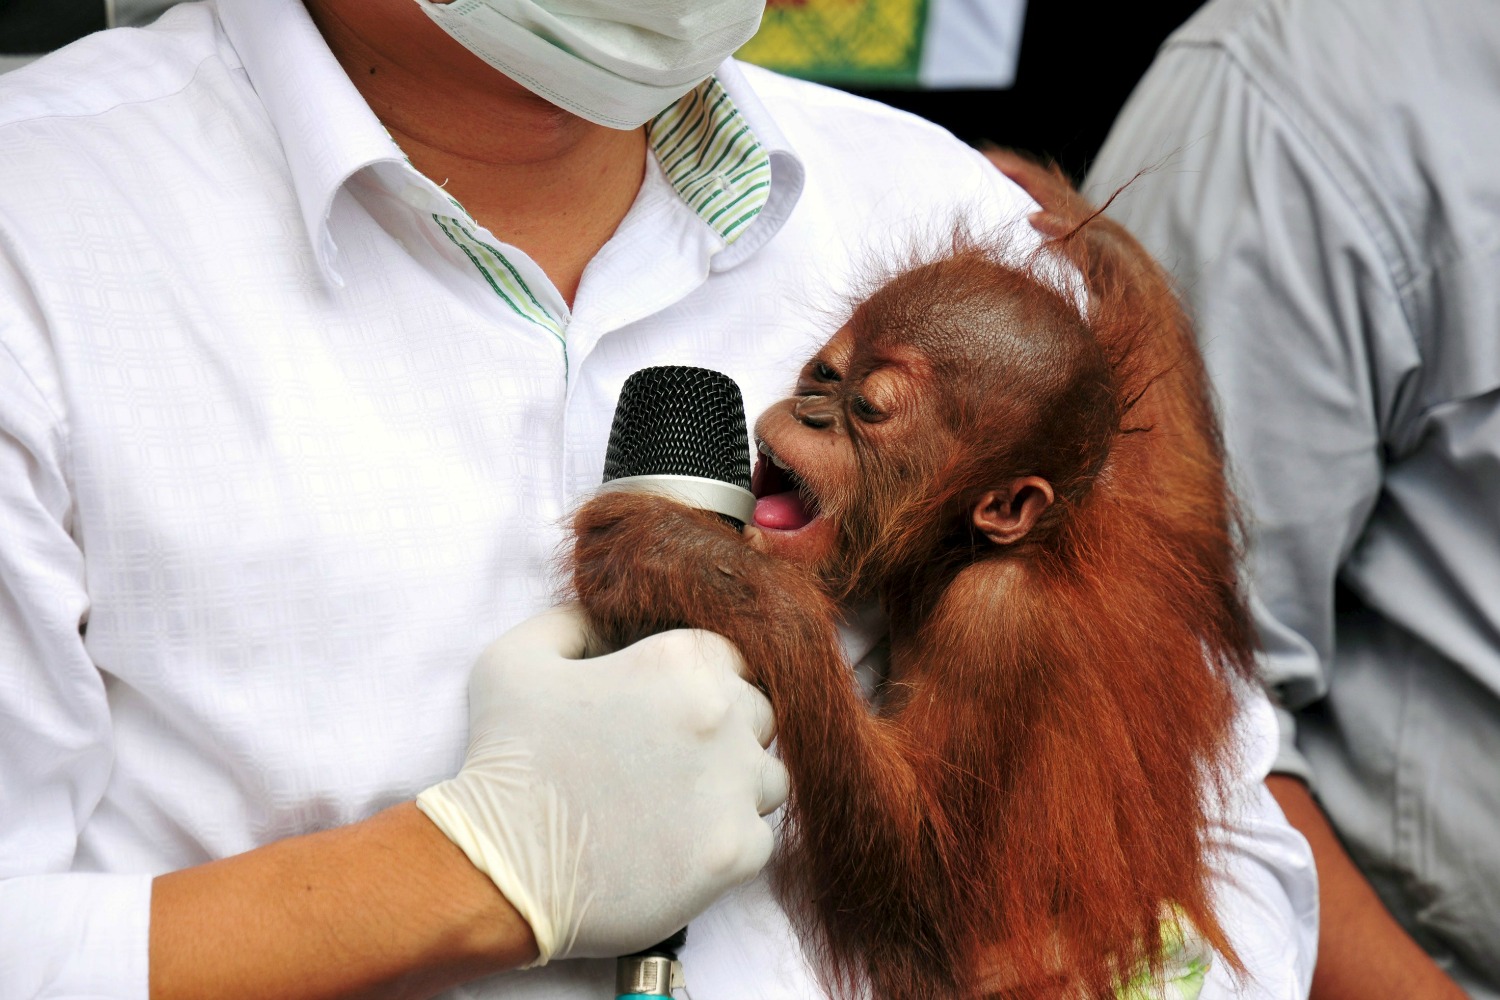 Baby orangutan trafficking web dismantled in Indonesia